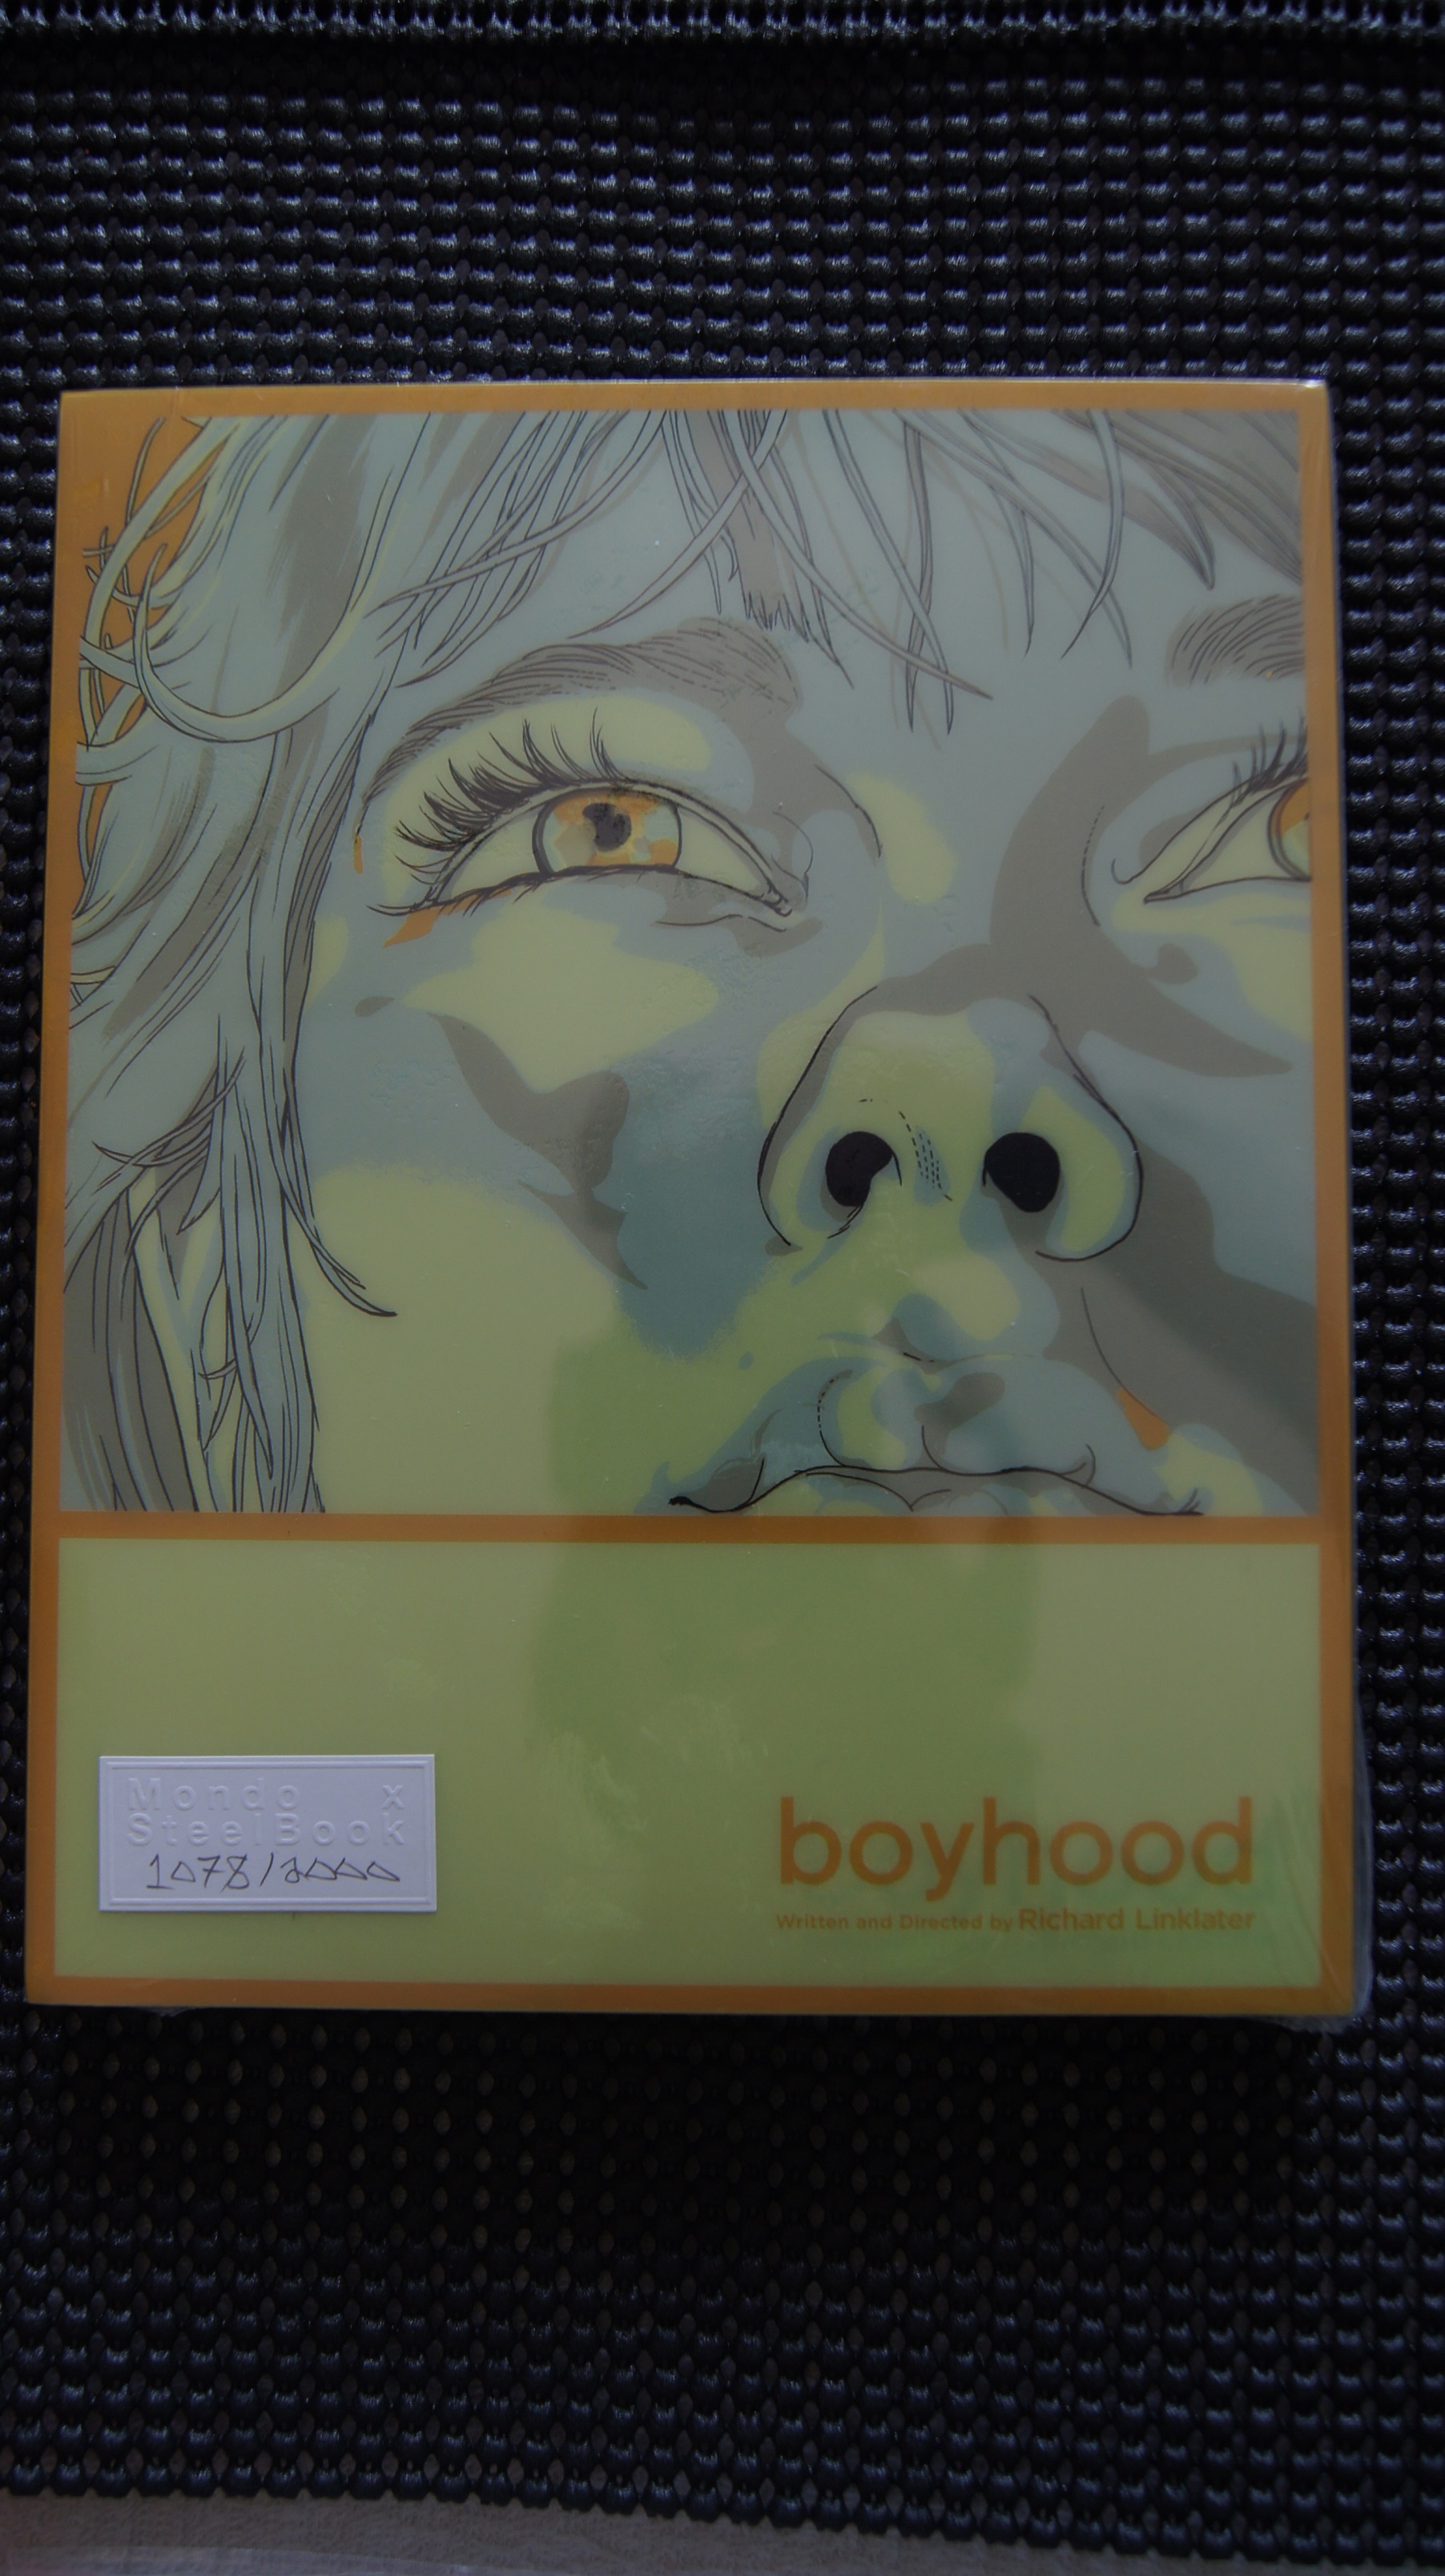 Boyhood - Future Shop Exclusive MondoXSteelbook #002 Variant 01